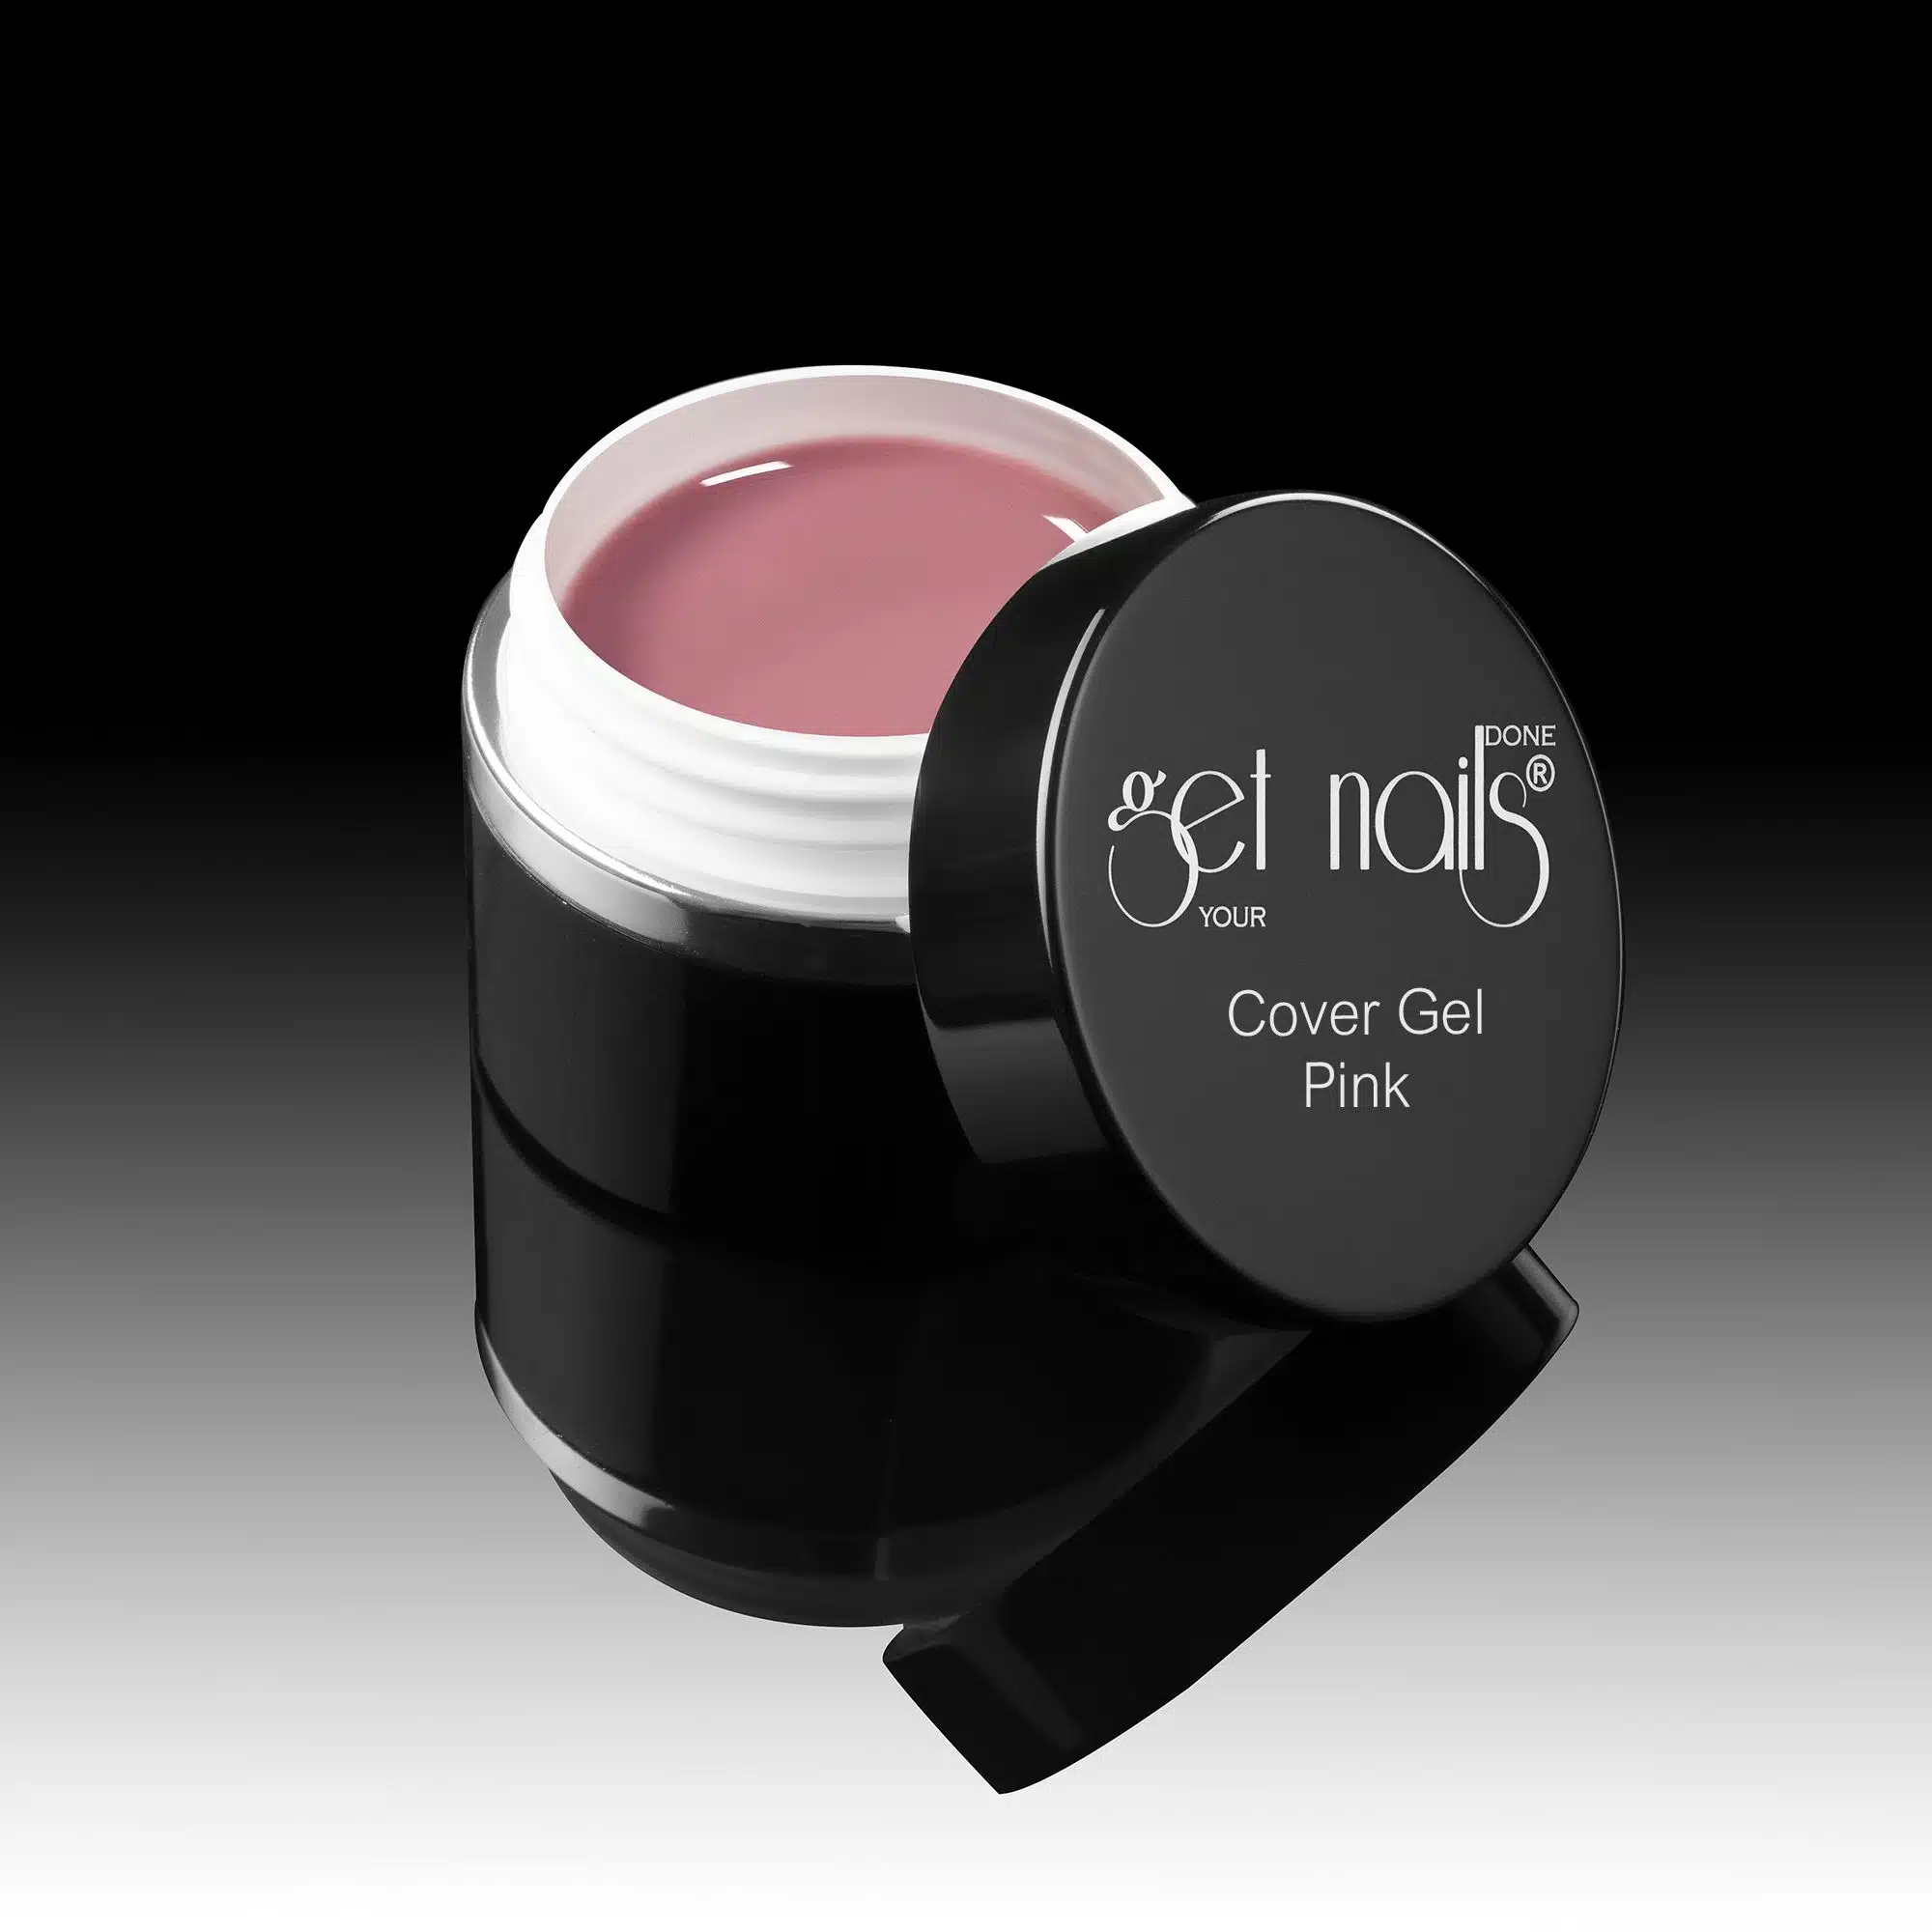 Get Nails Austria - Cover Gel Pink 50g